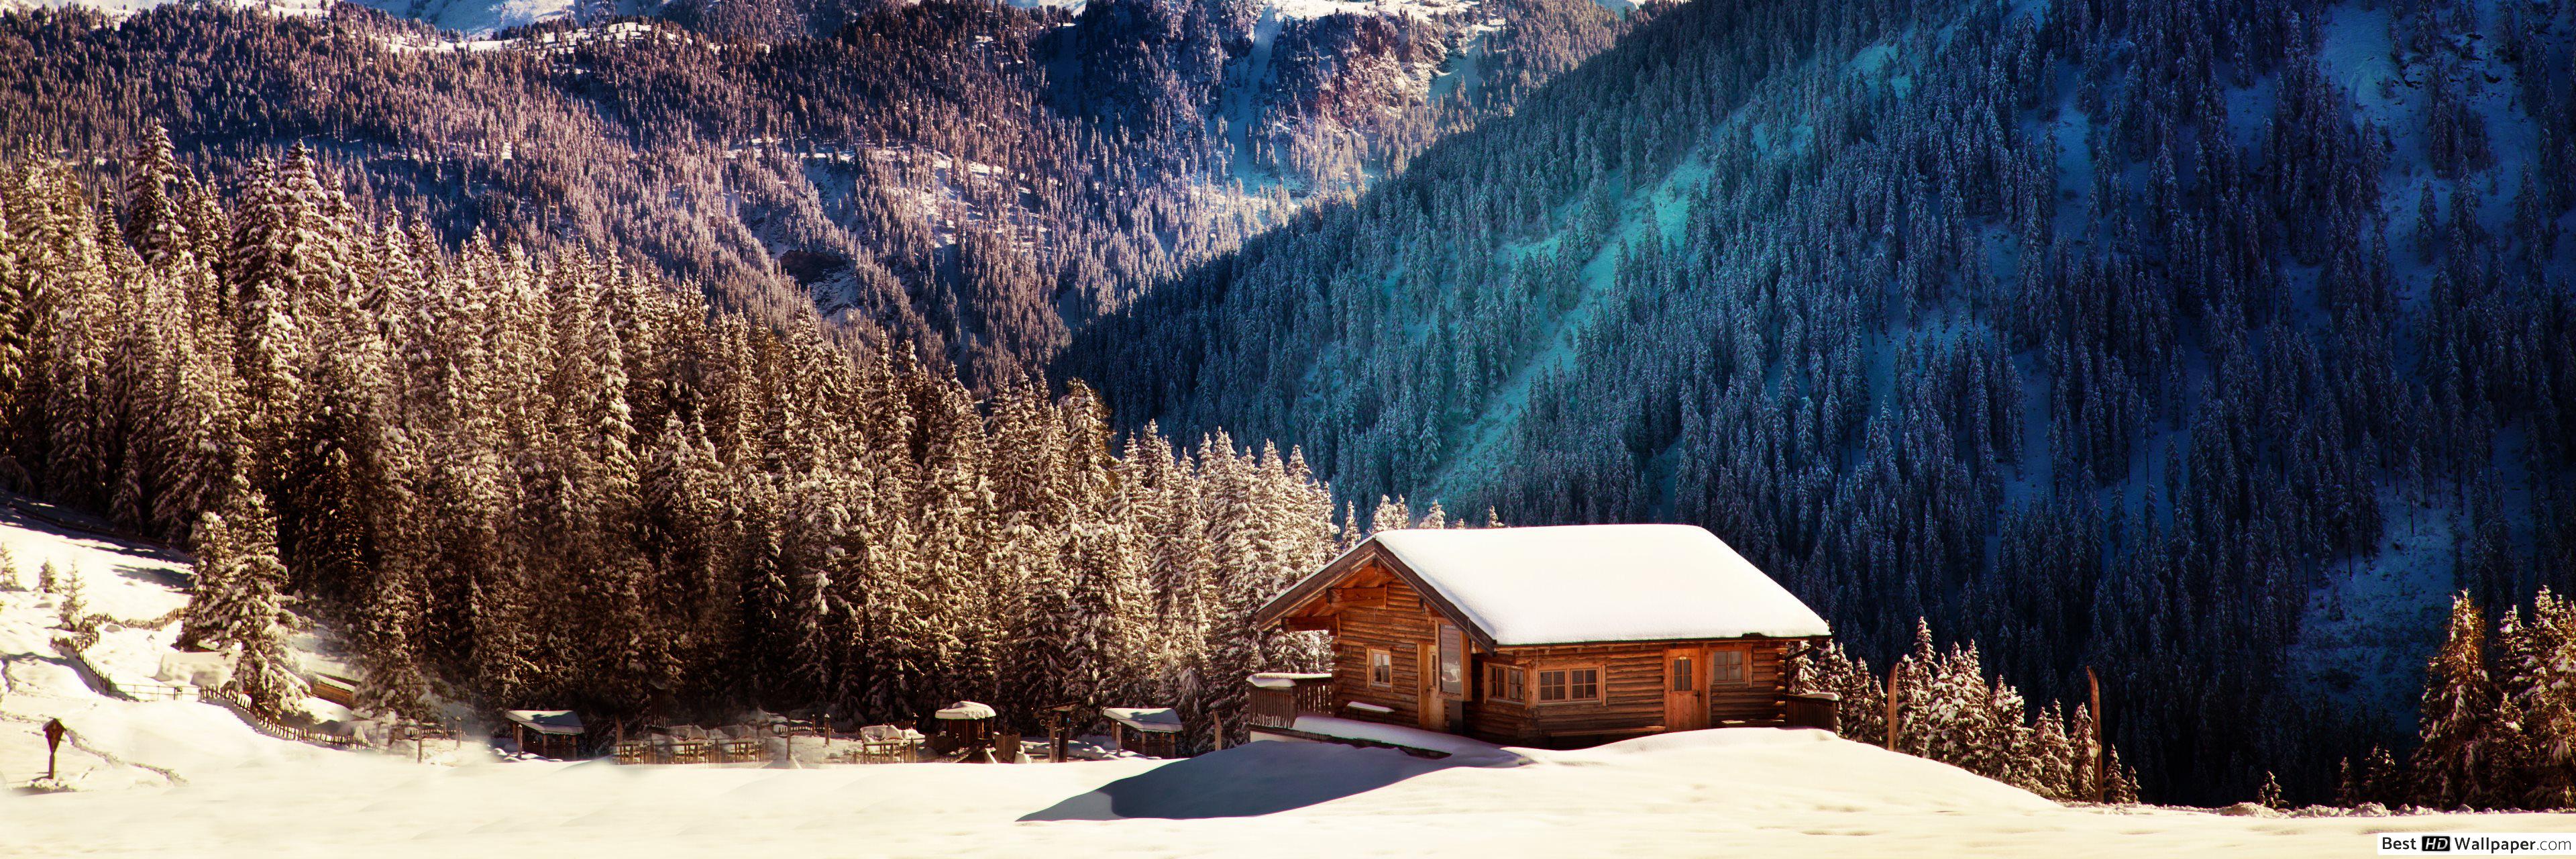 Winter log cabin HD wallpaper download